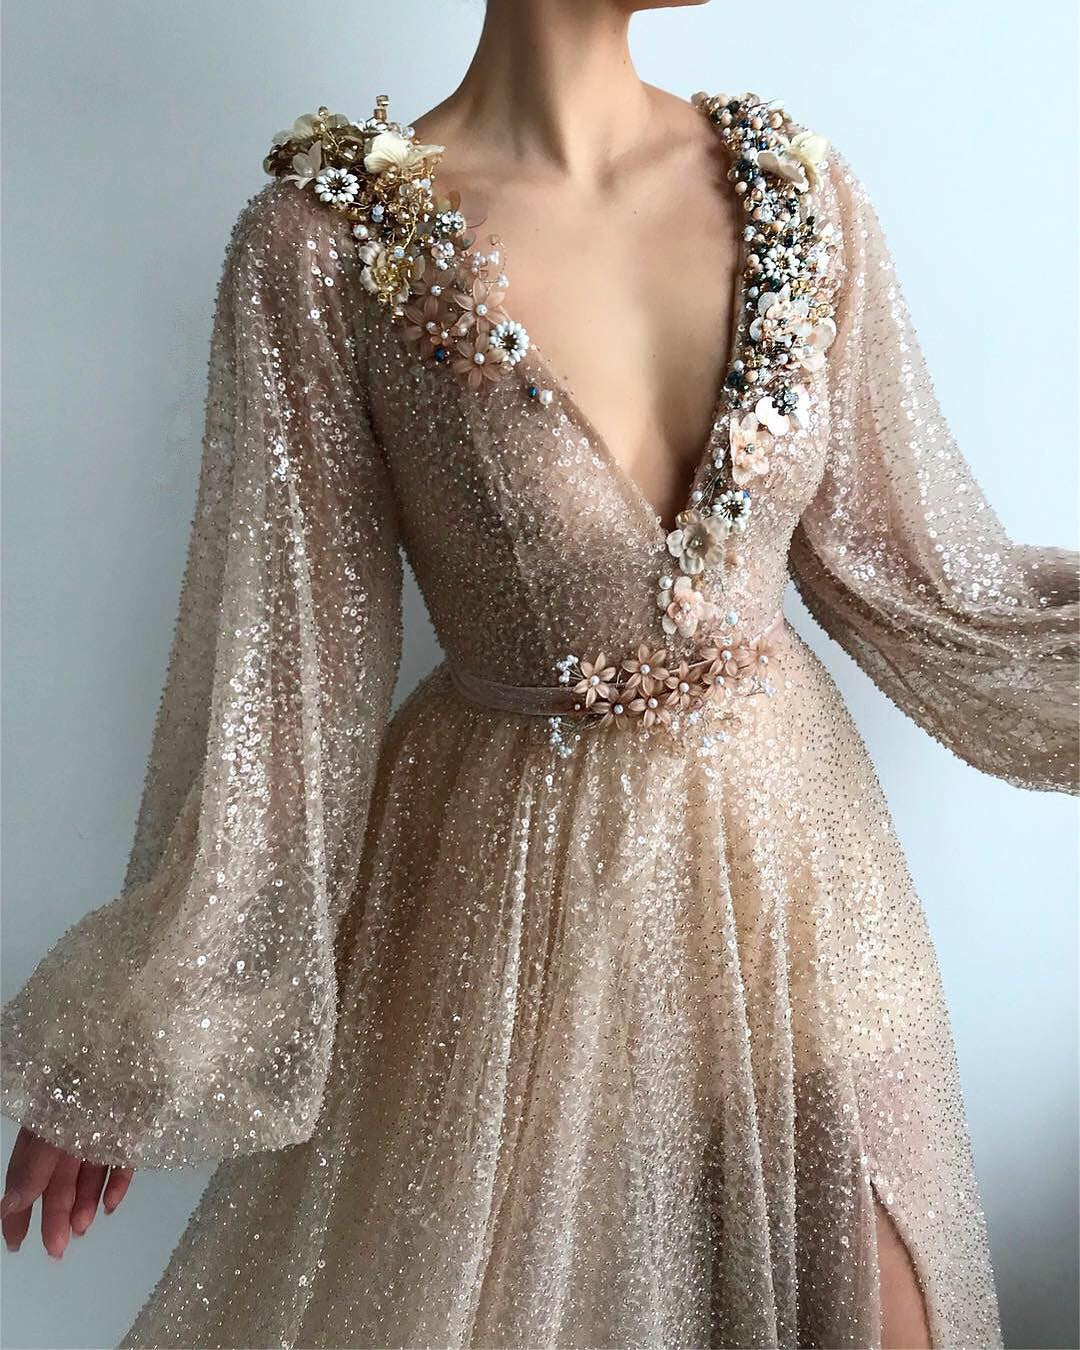 Modest Long A-line V-neck Sequined Prom Dress with Slit-BIZTUNNEL